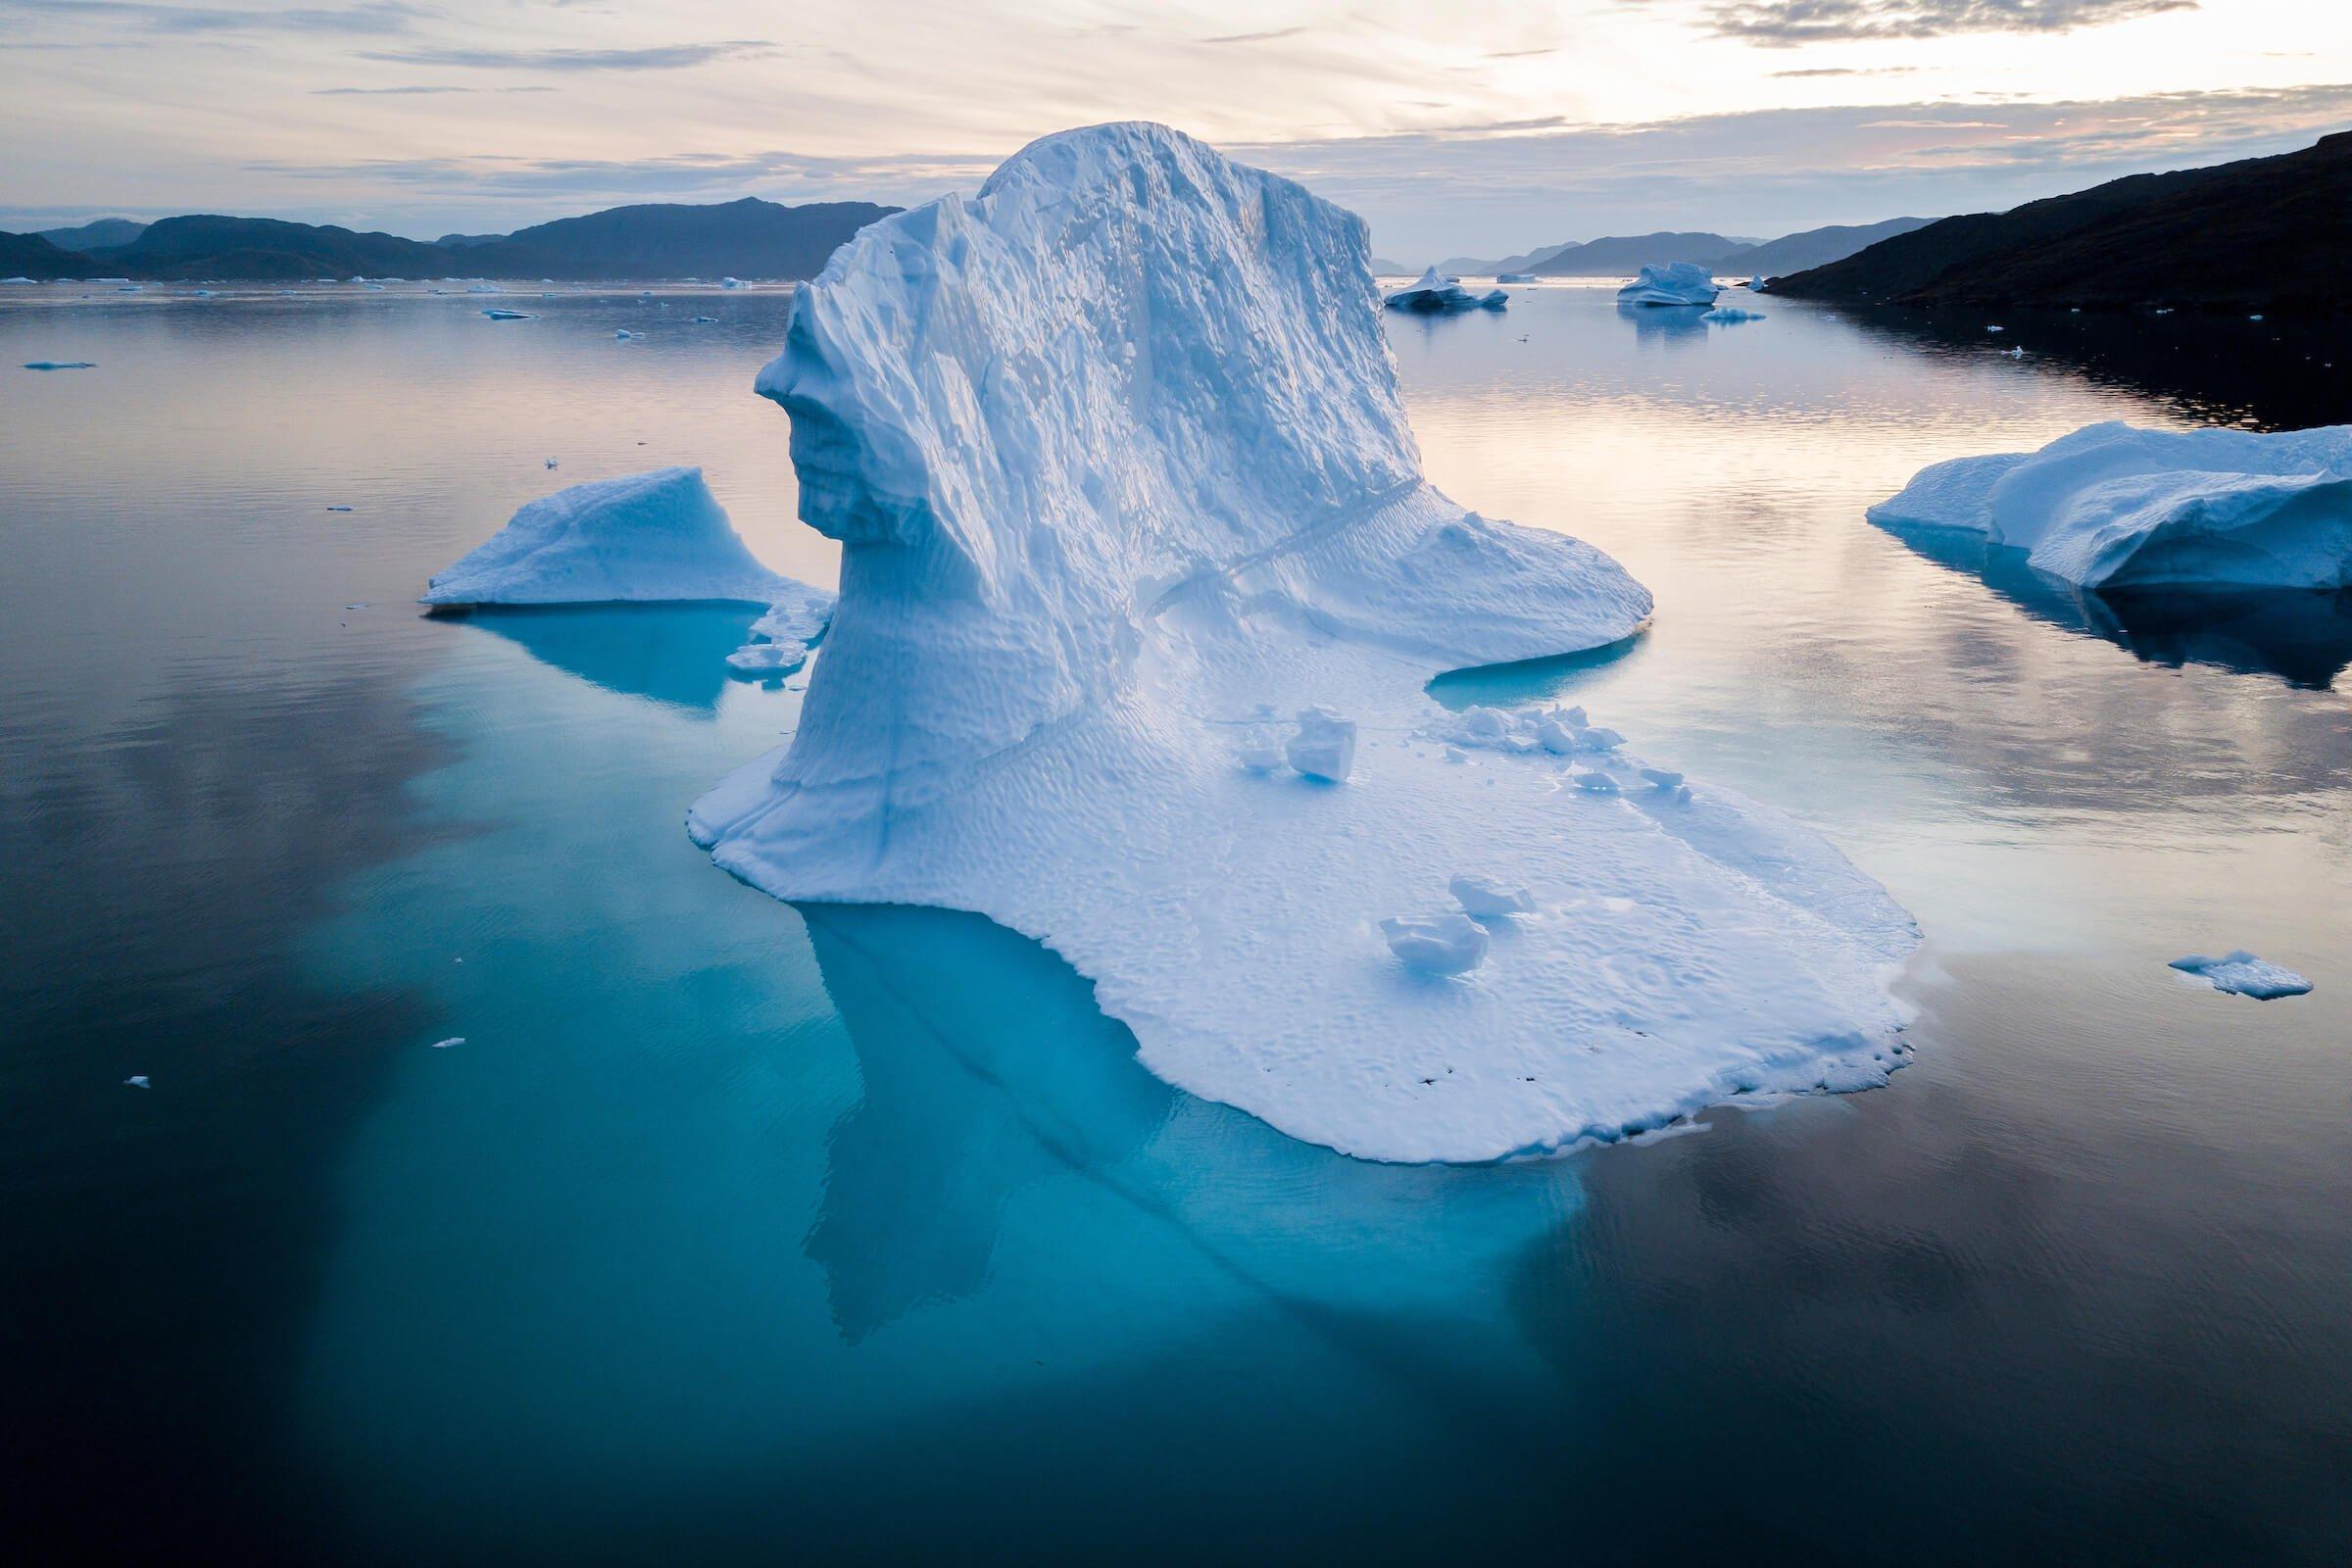 Iceberg spotted on iceberg safari in Narsaq. Photo - Aningaaq R. Carlsen